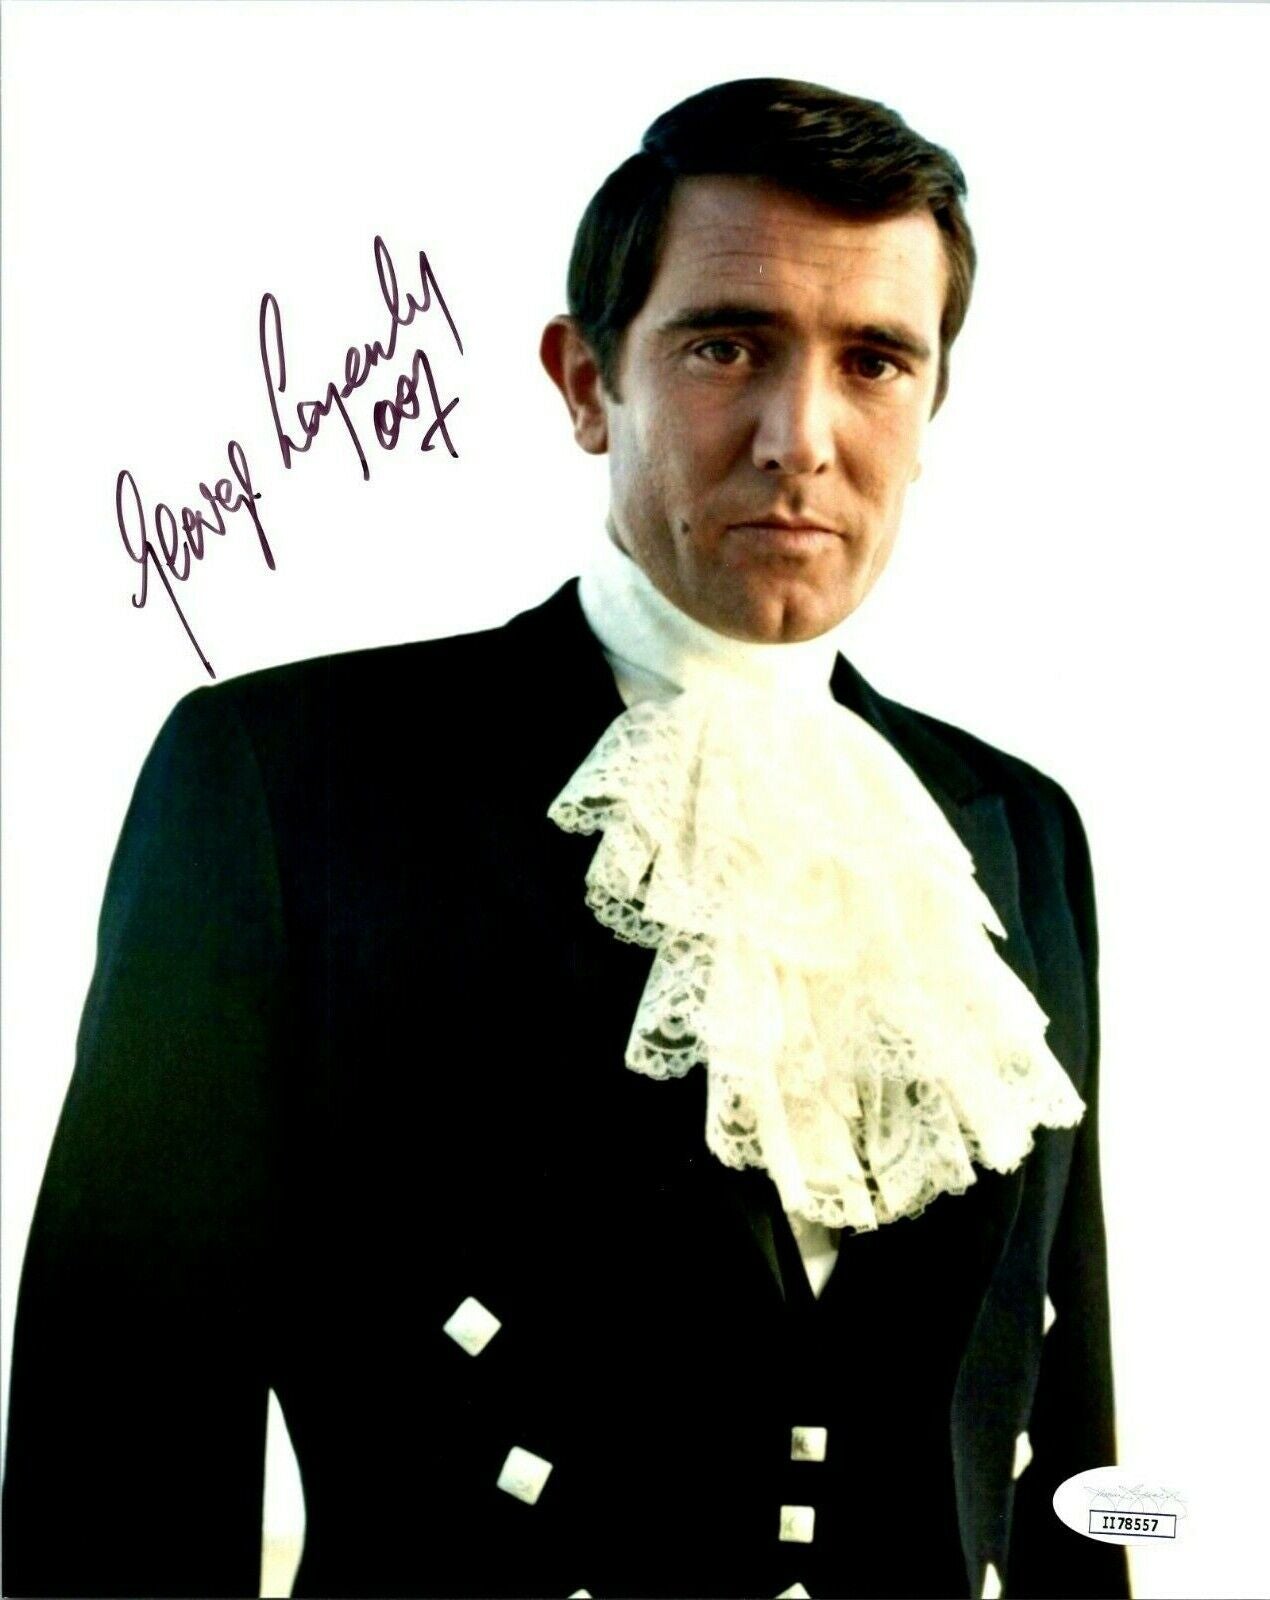 George Lazenby James Bond 007 Autographed 8x10 Color Photo JSA COA II78557